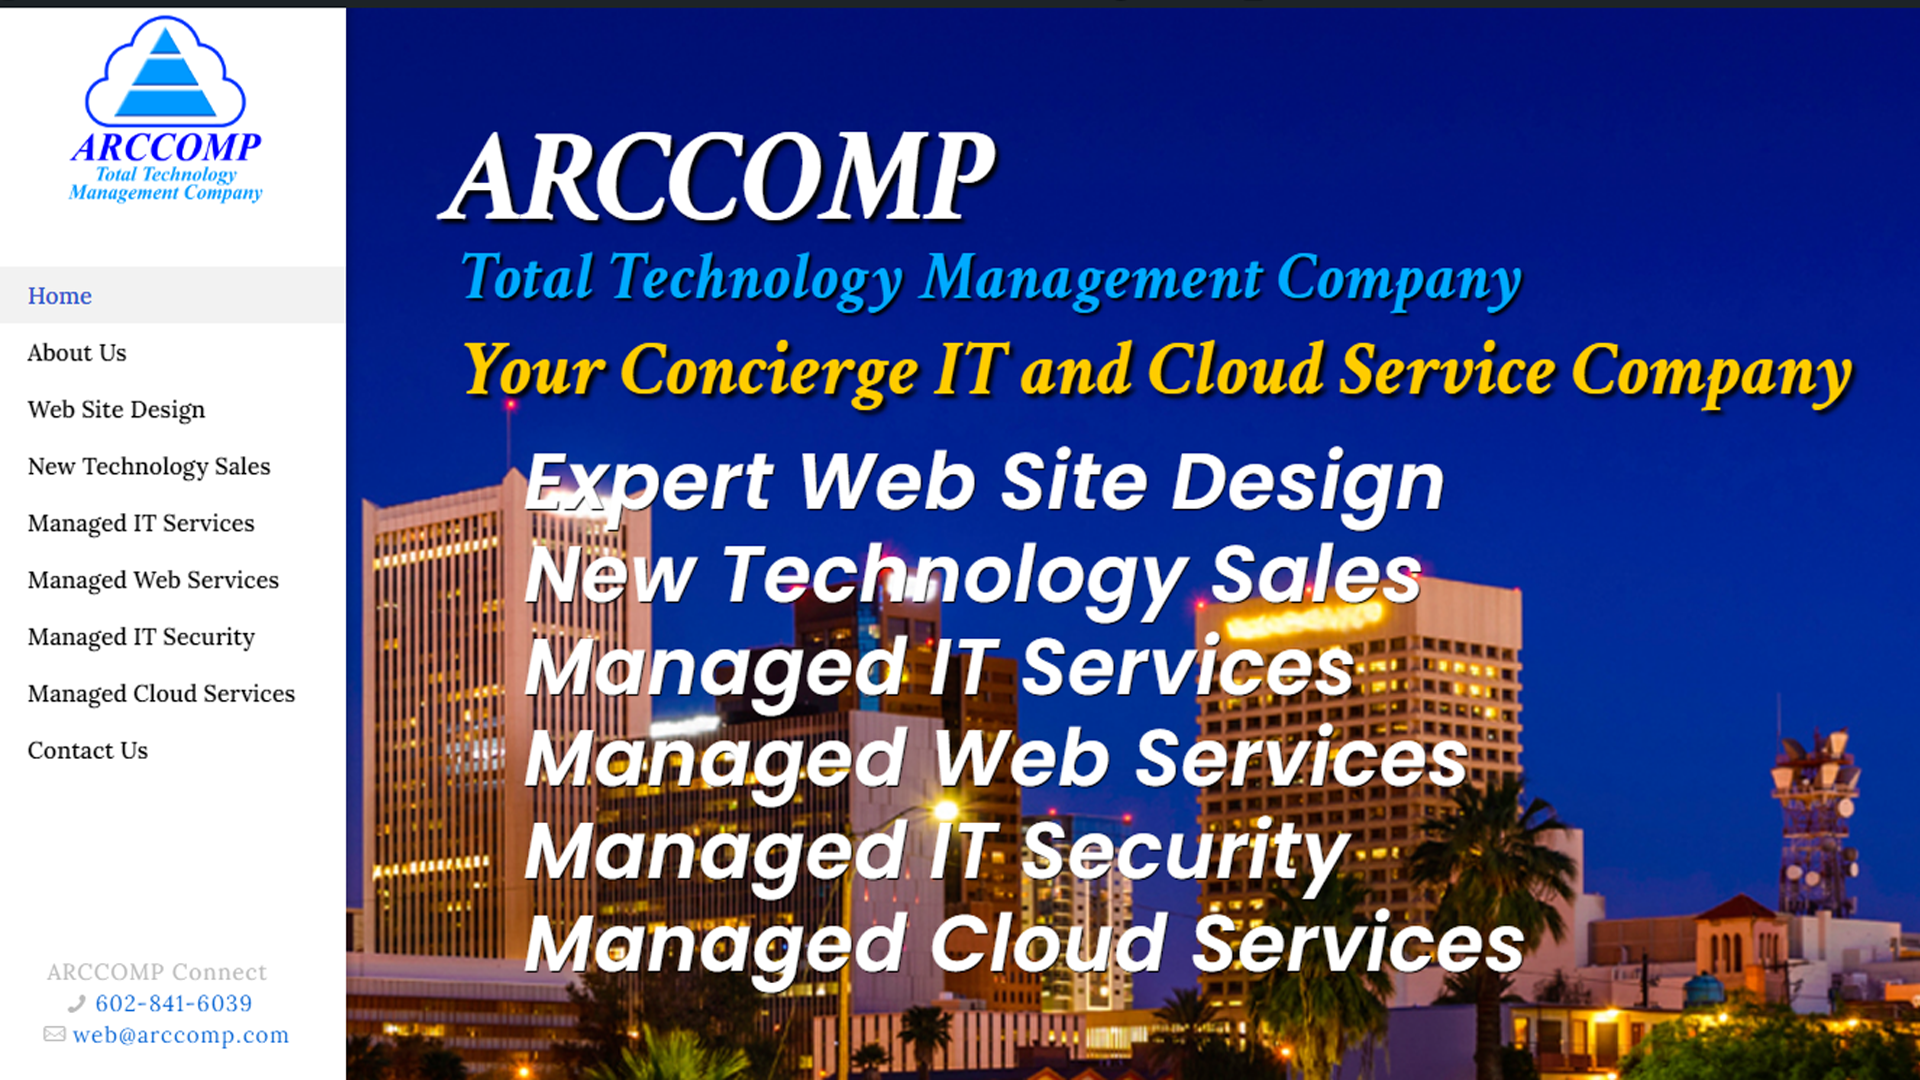 ARCCOMP - Global Web Design, IT and Cloud Services